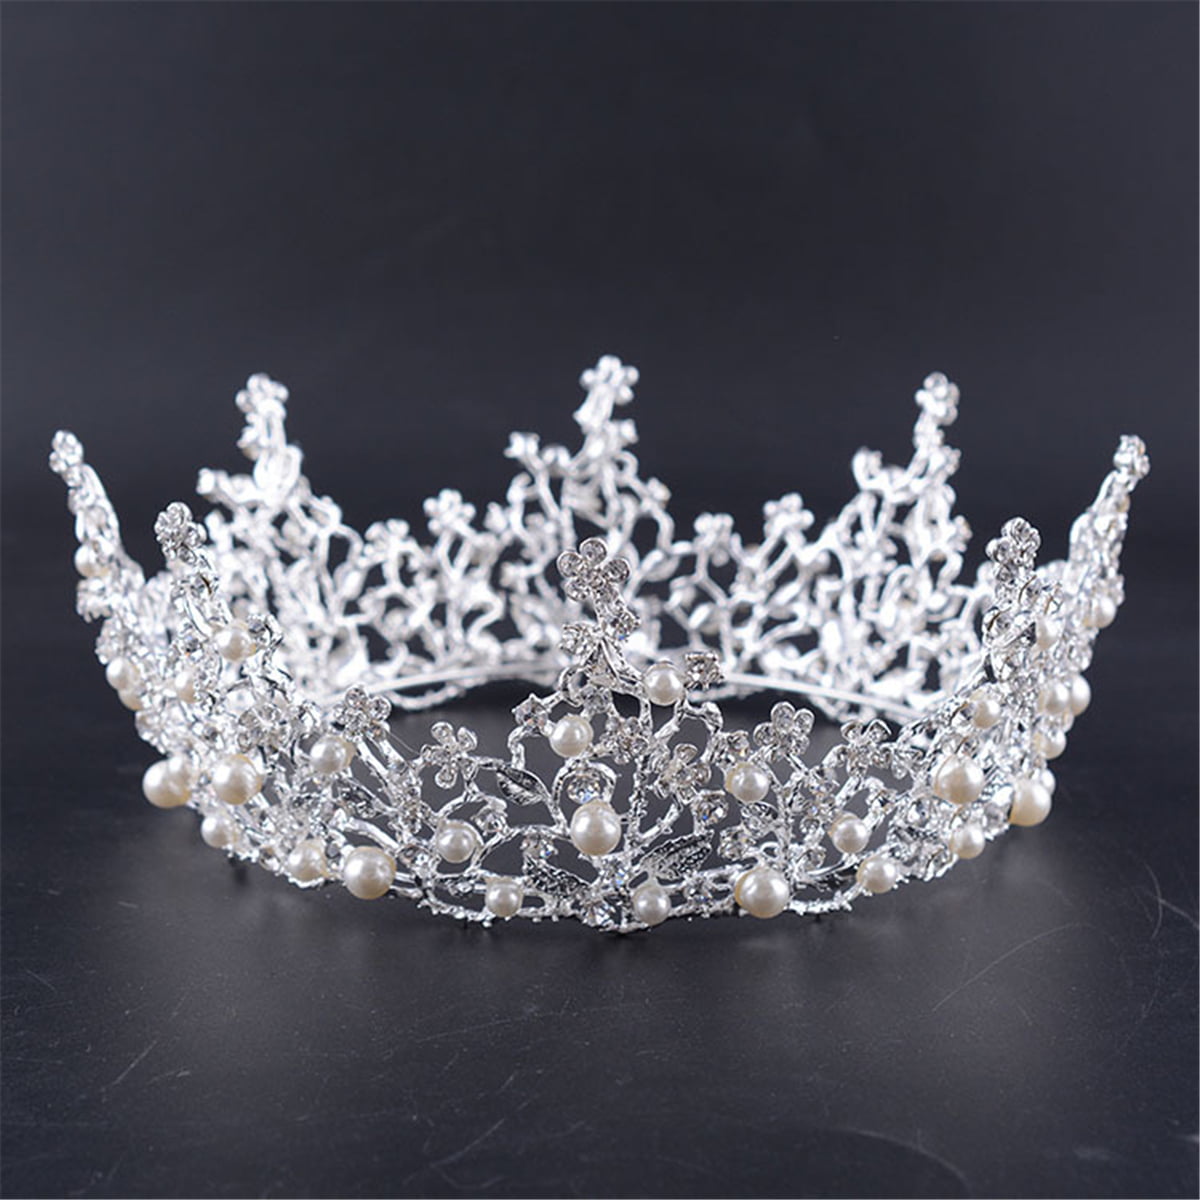 Bridal Wedding Party Rhinestone Crystal Princess Crown Tiara Headband Jewelry